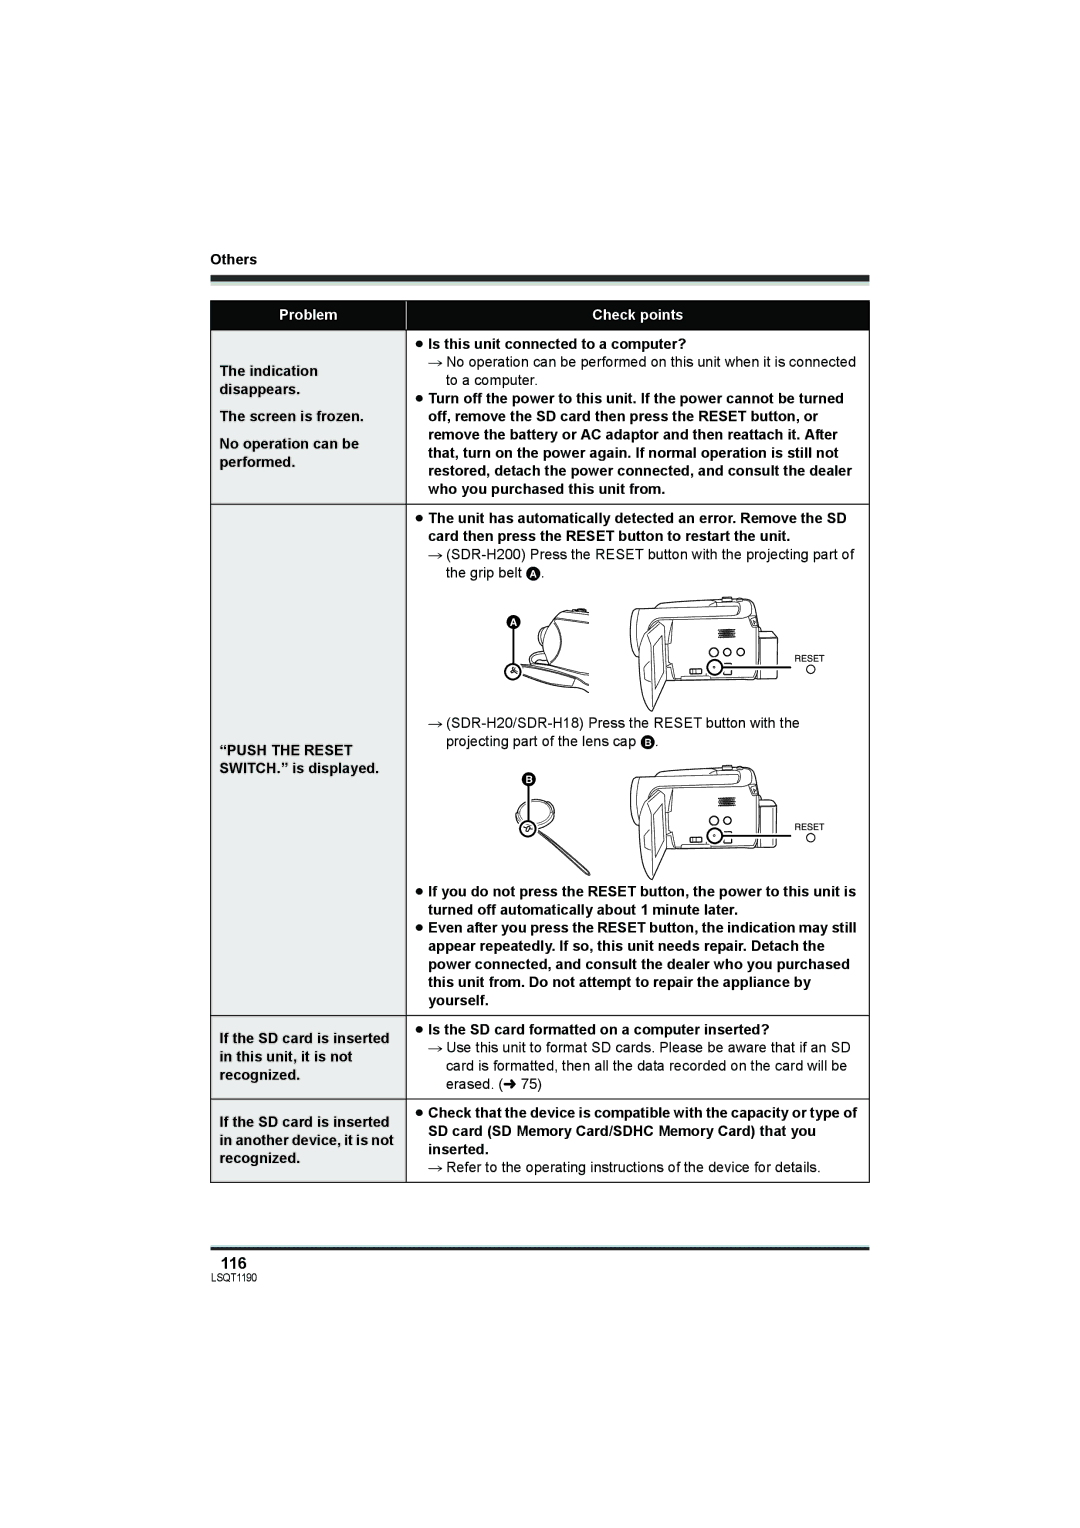 Panasonic SDR-H18, SDR-H200 operating instructions 116 